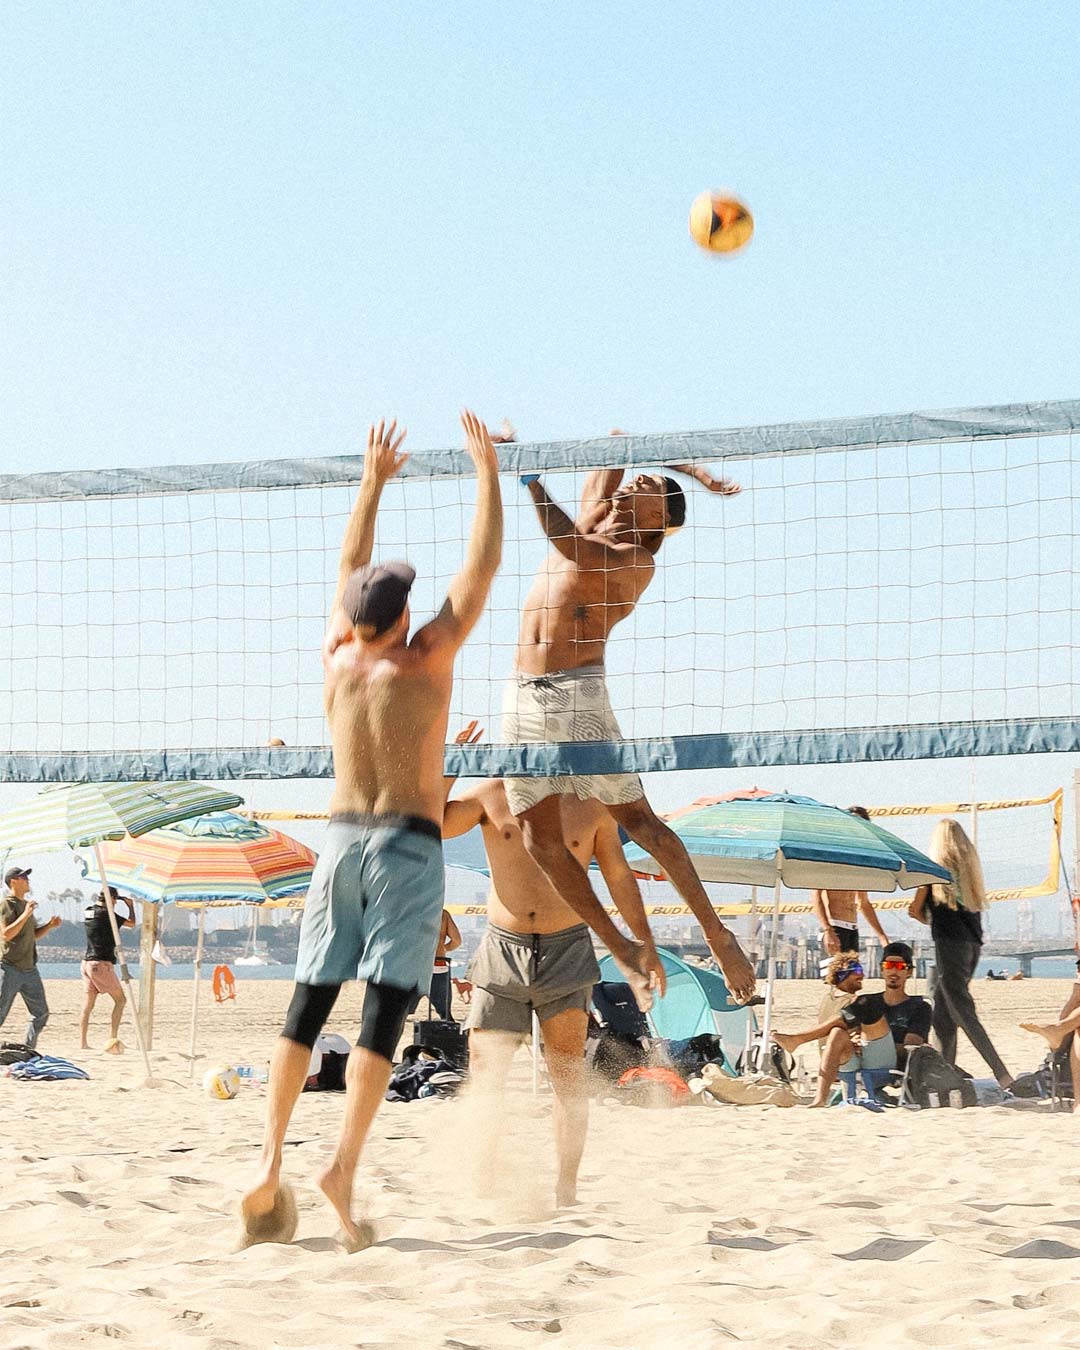 bachelor party ideas beach volley ball